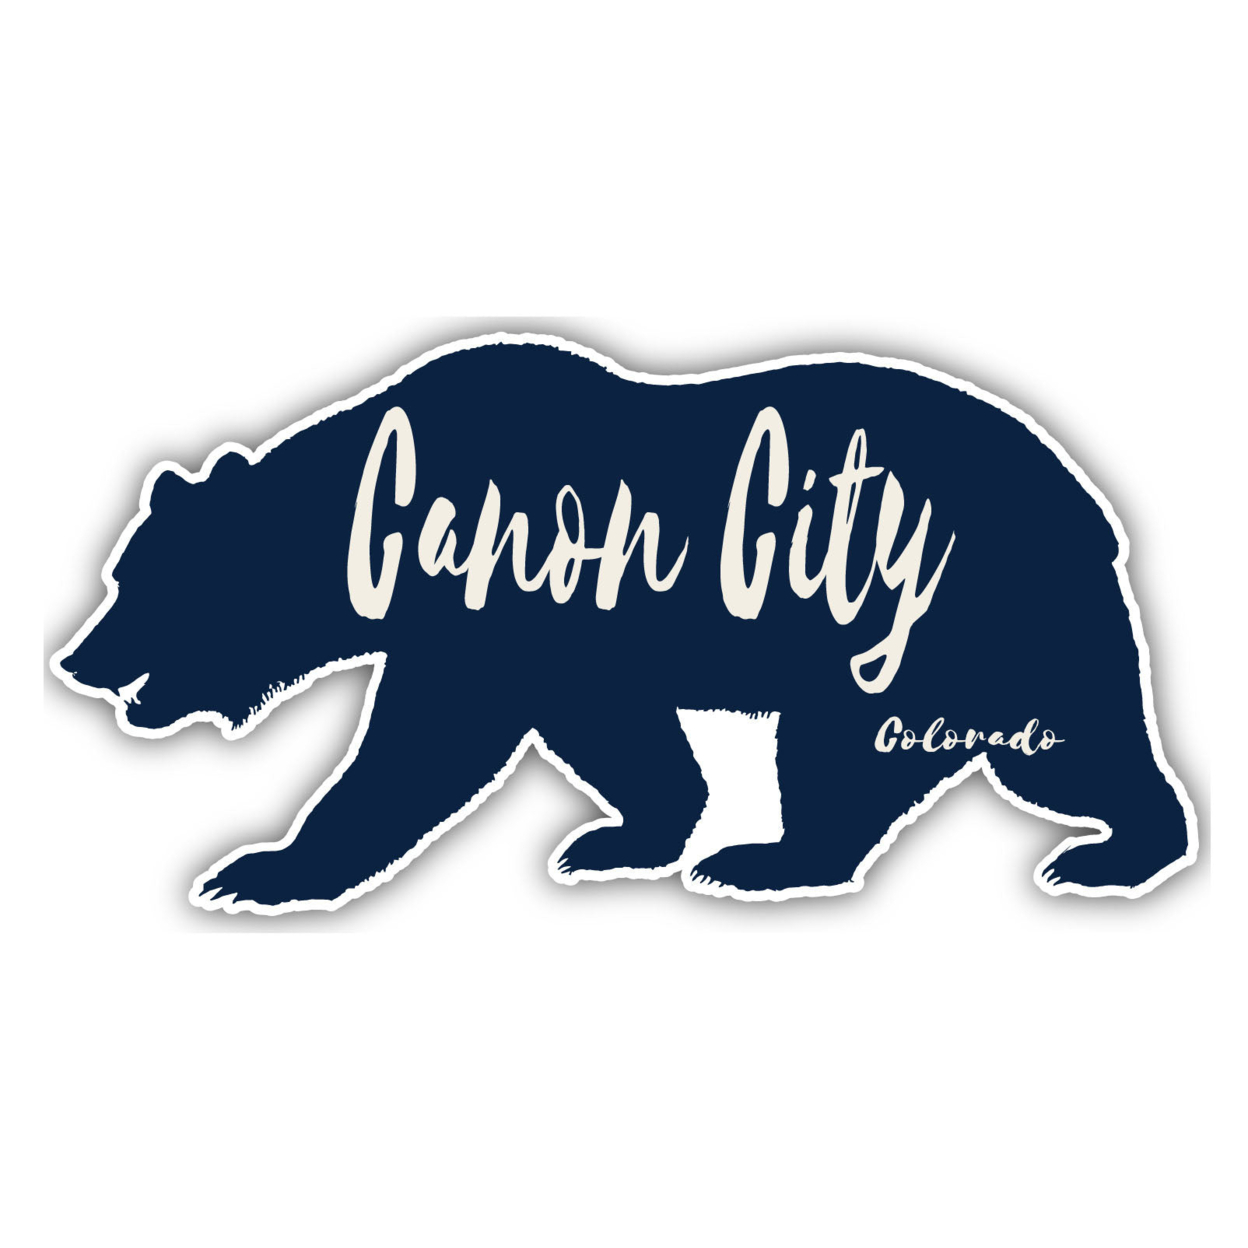 Canon City Colorado Souvenir Decorative Stickers (Choose Theme And Size) - 4-Pack, 12-Inch, Bear